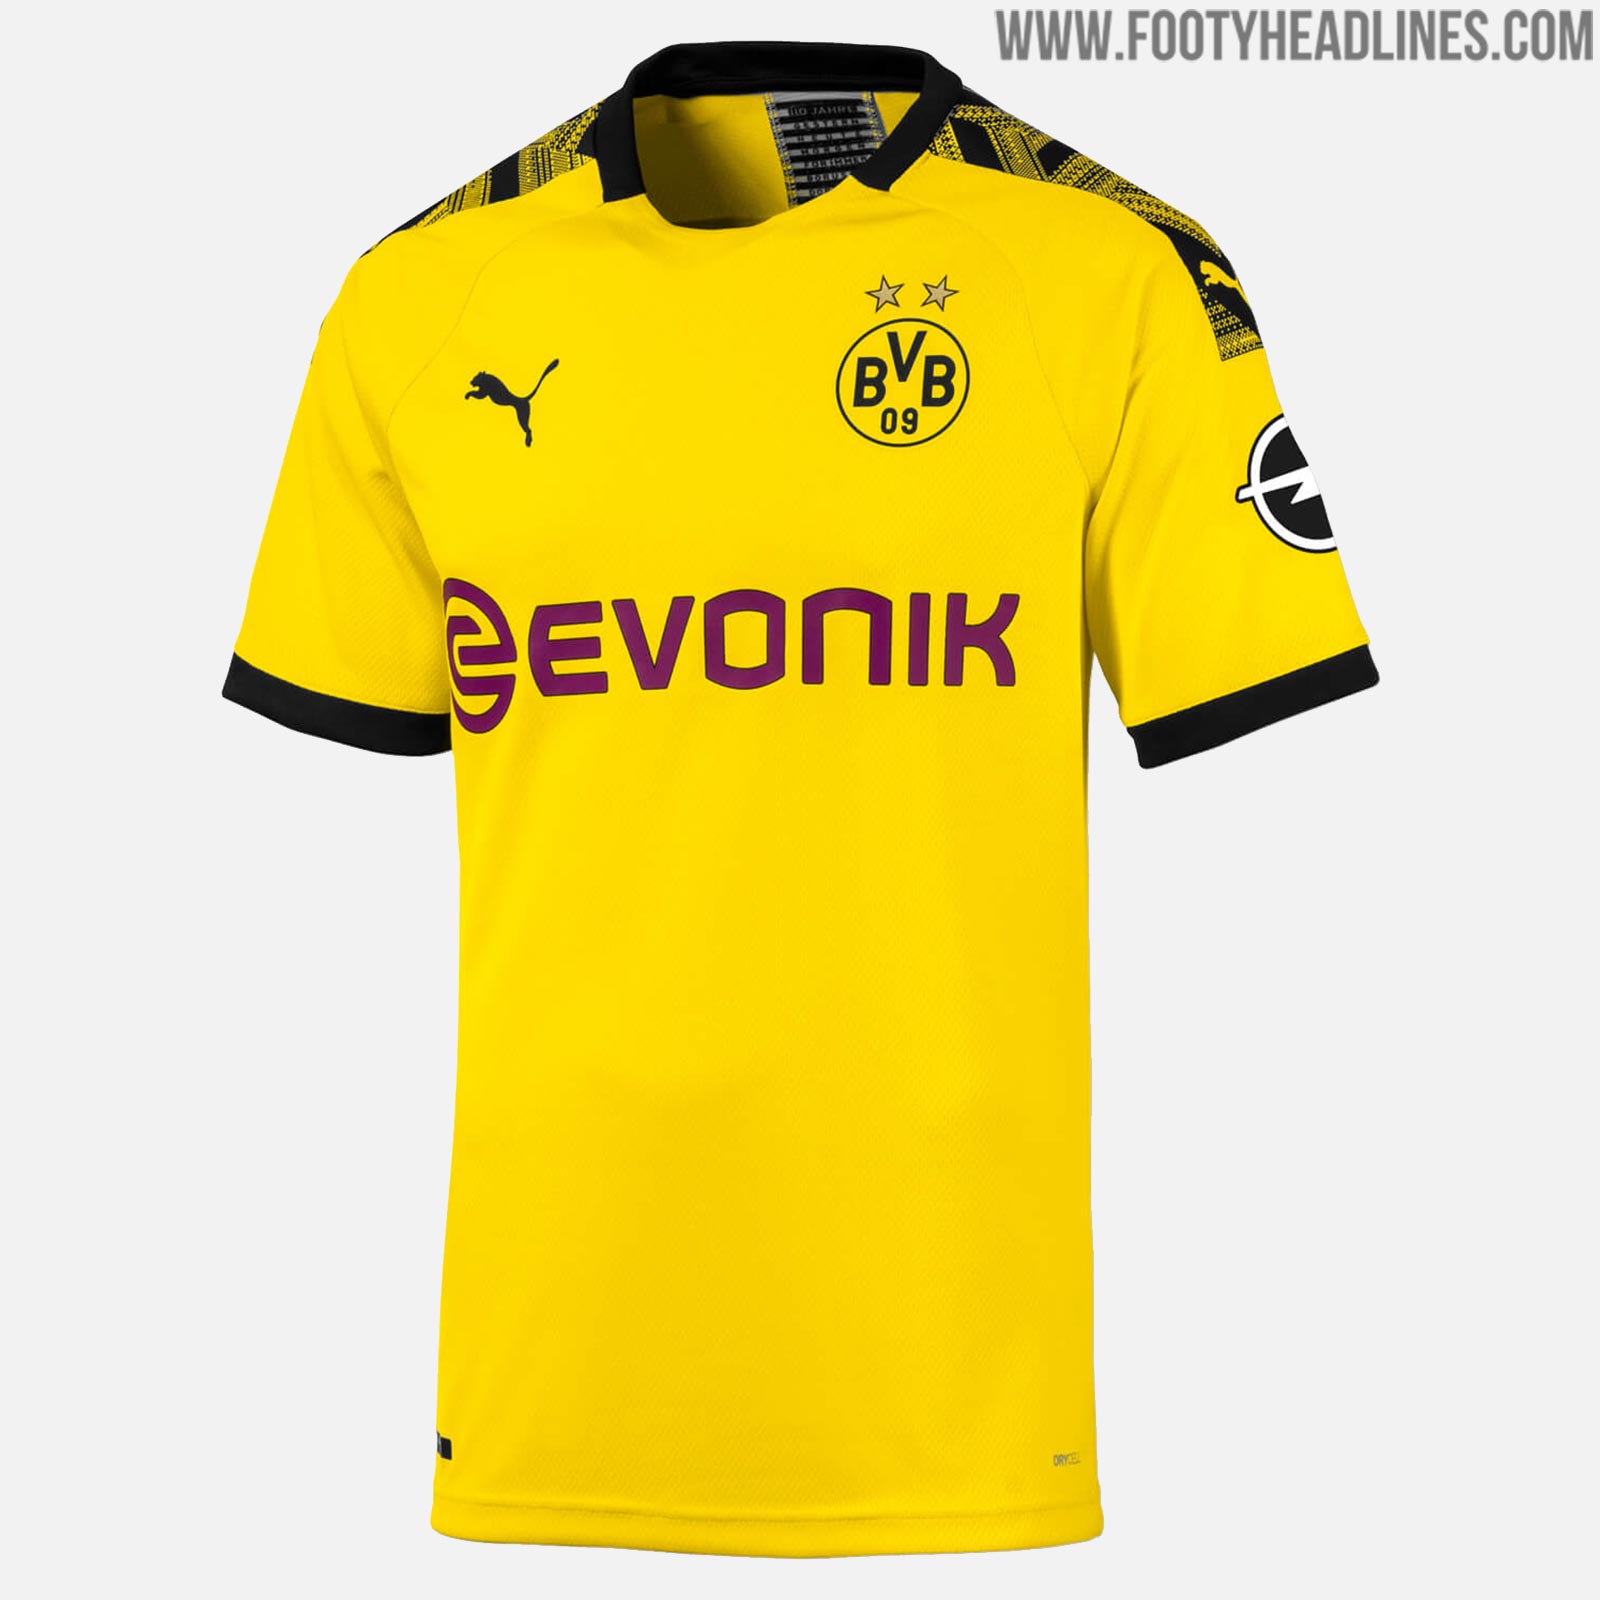 Borussia Dortmund 19-20 Home Kit Released - Footy Headlines